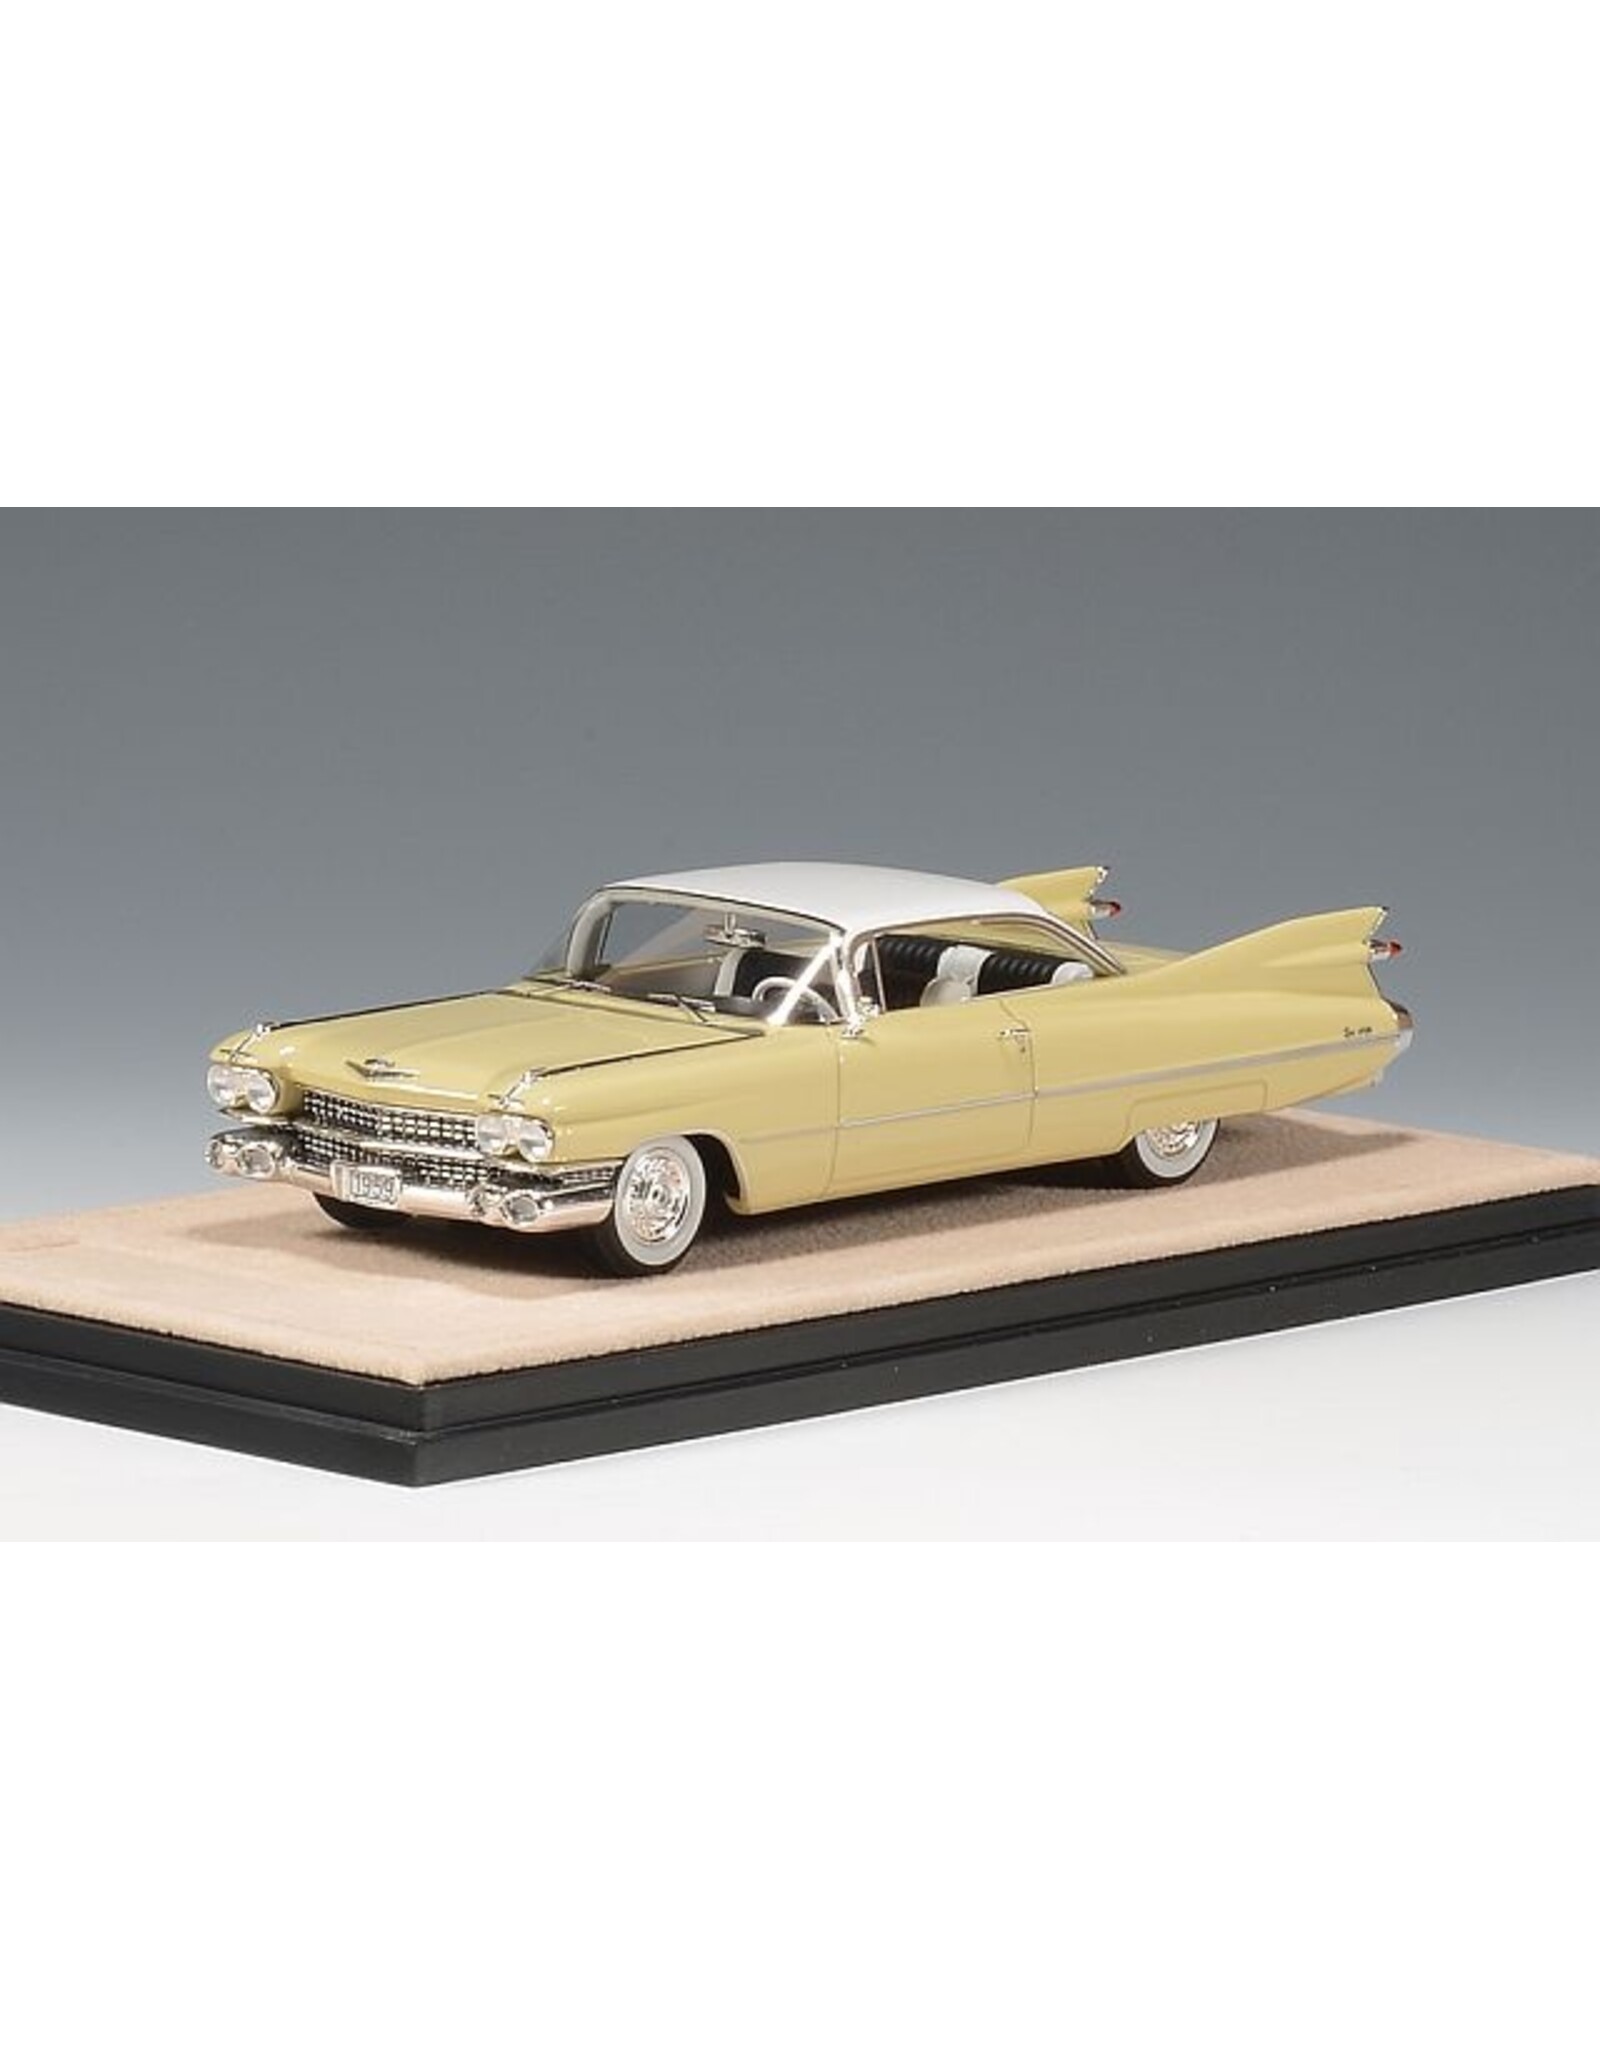 Cadillac(General Motors) Cadillac Coupe Deville(1959)Gotham gold